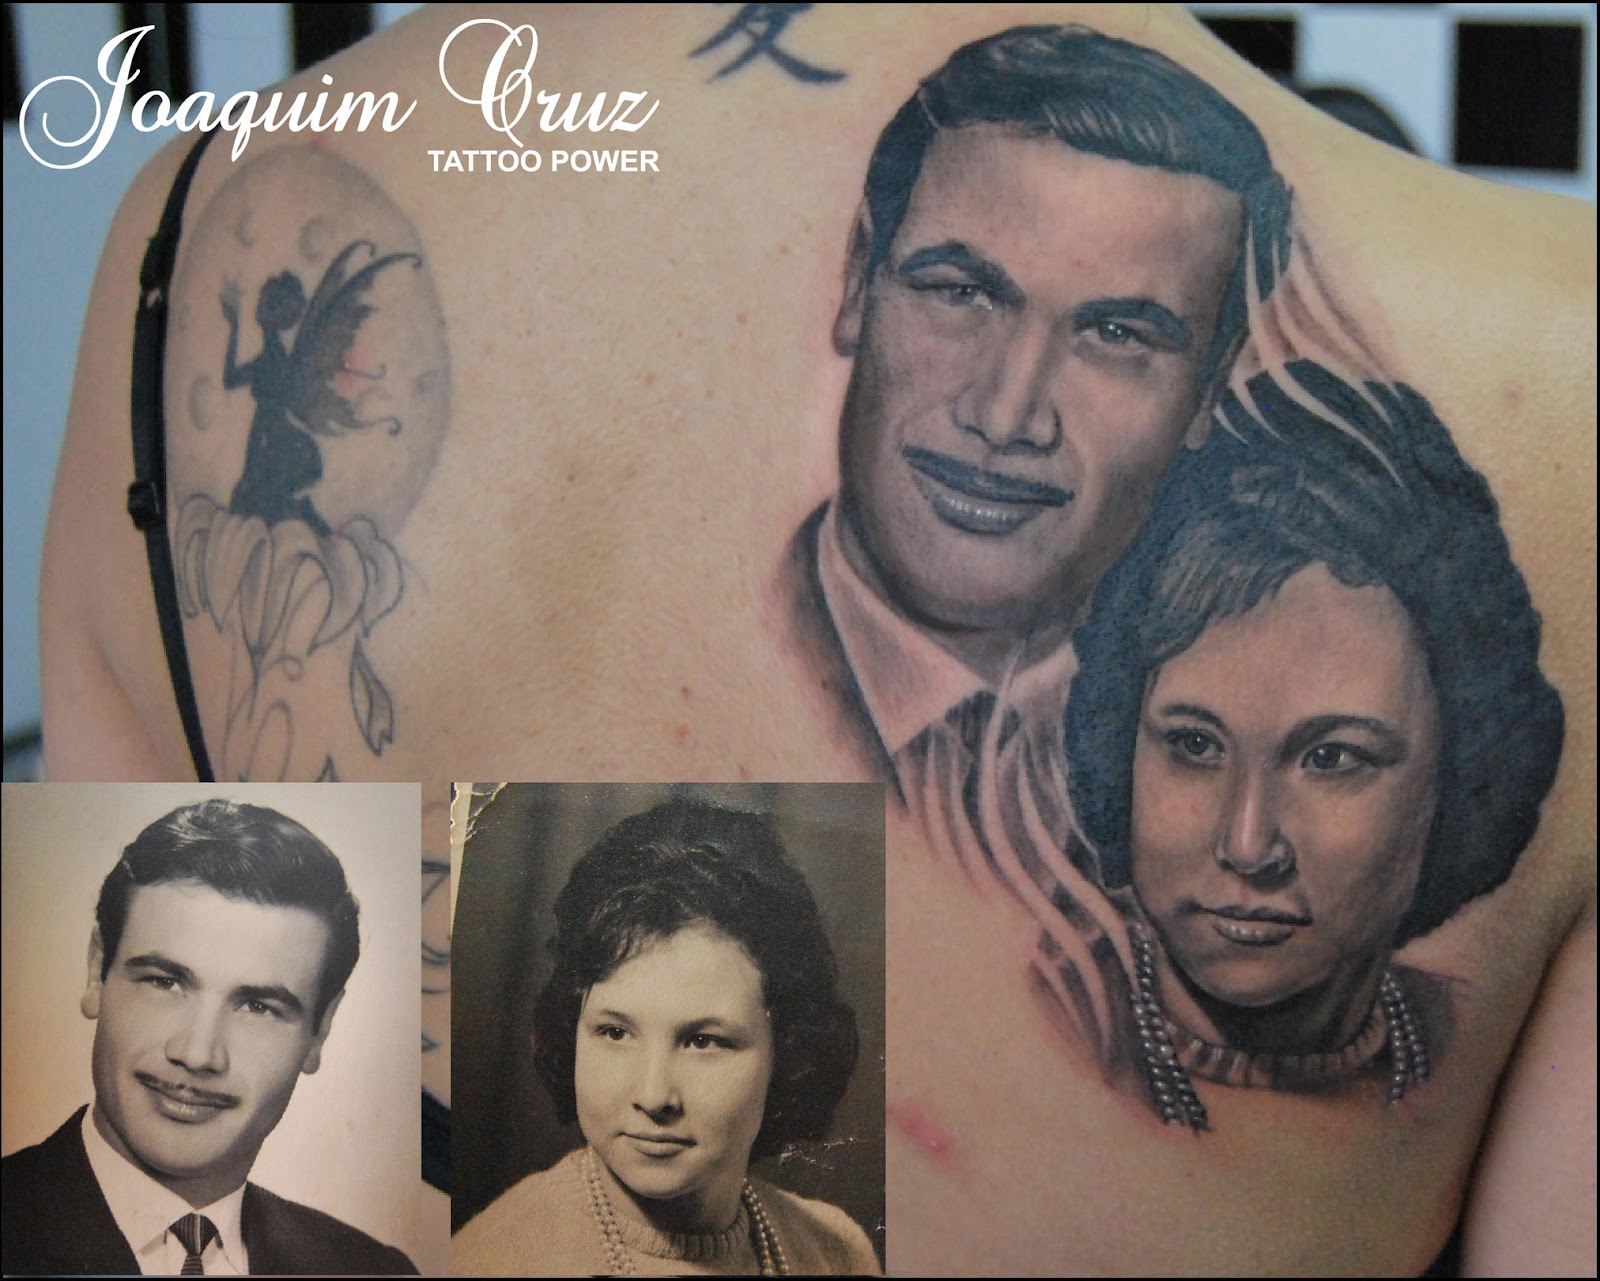 http://1.bp.blogspot.com/-aUNiIvBvNBY/T5kpGKoY68I/AAAAAAAAD-U/YlxSNxmLkOE/s1600/retratos+tattoo+power+lojas+de+tatuagens+porto+matosinhos+portugal+joaquim+cruz.jpg